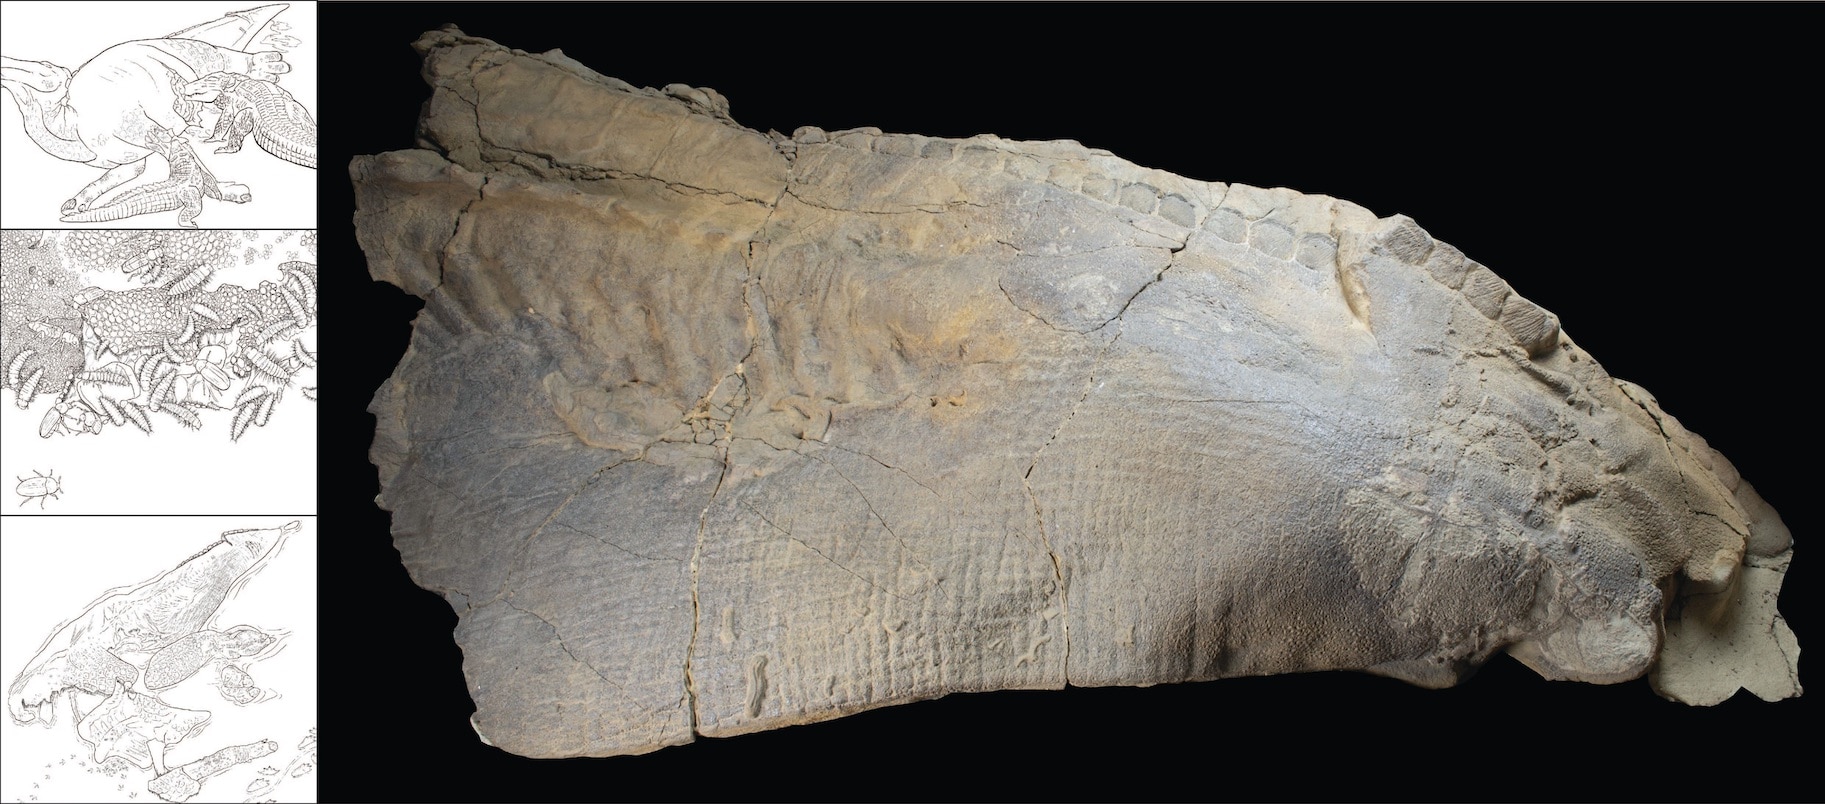 Mummified dinosaur skin and decay illustration